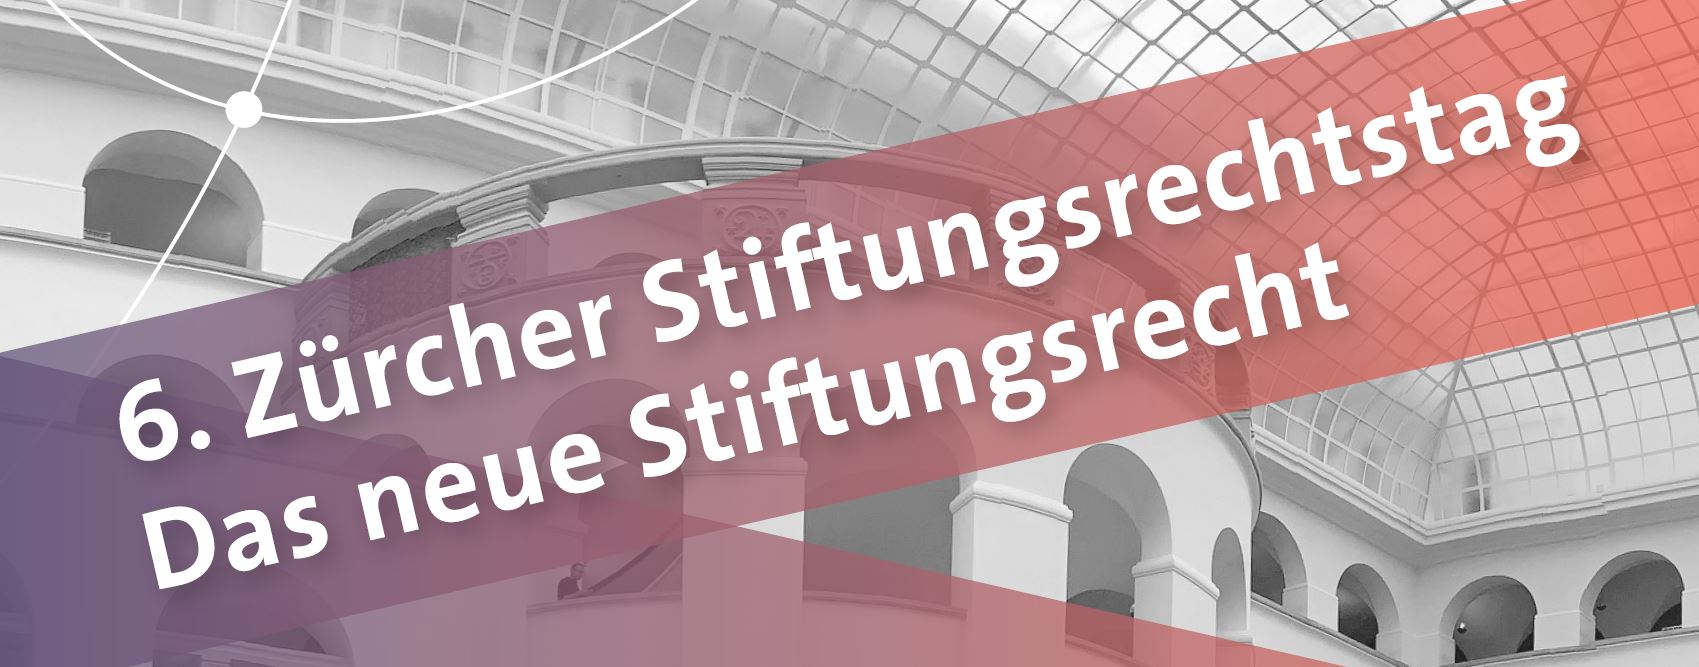 Zürcher Stiftungsrechtstag StiftungsratsMandat.com